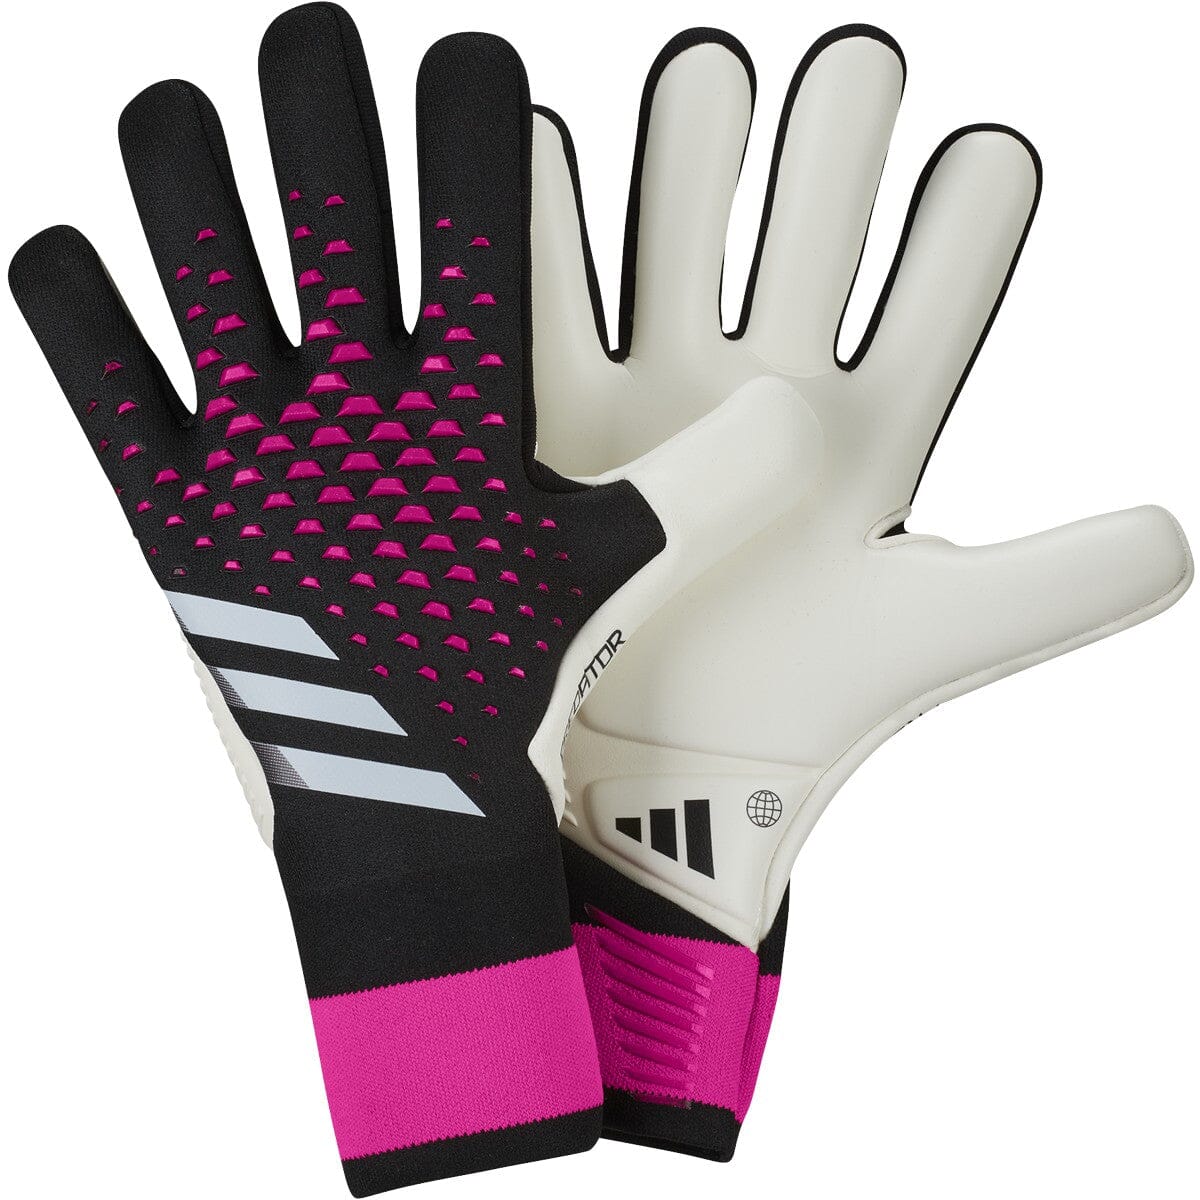 Adidas Predator Pro Goalie Gloves, Blue/Turbo/White / 12